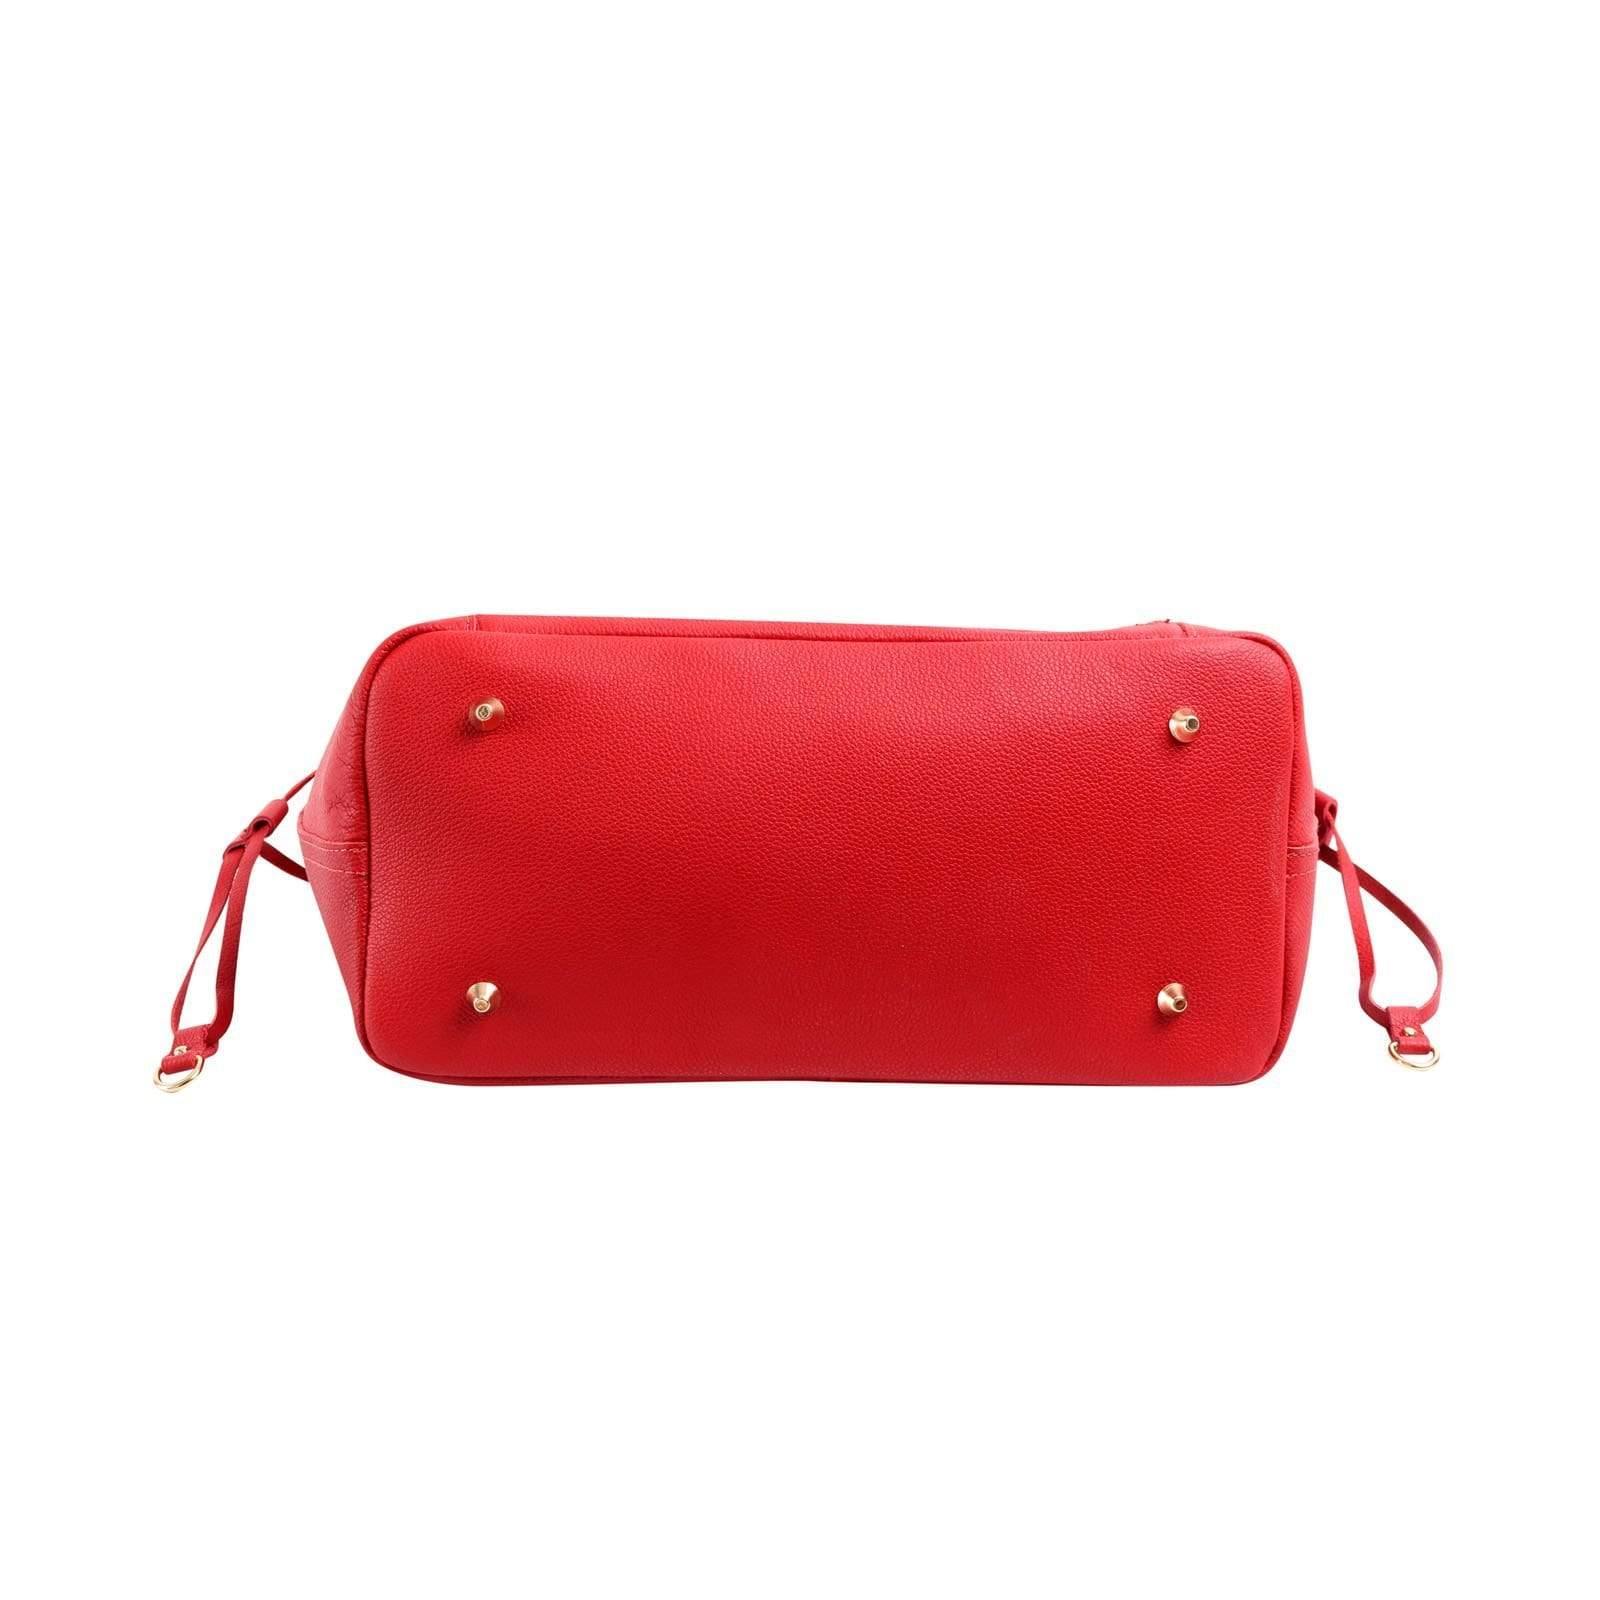 Valentino Bags by Mario Valentino Ally Handbag, Red, New, $895 | eBay